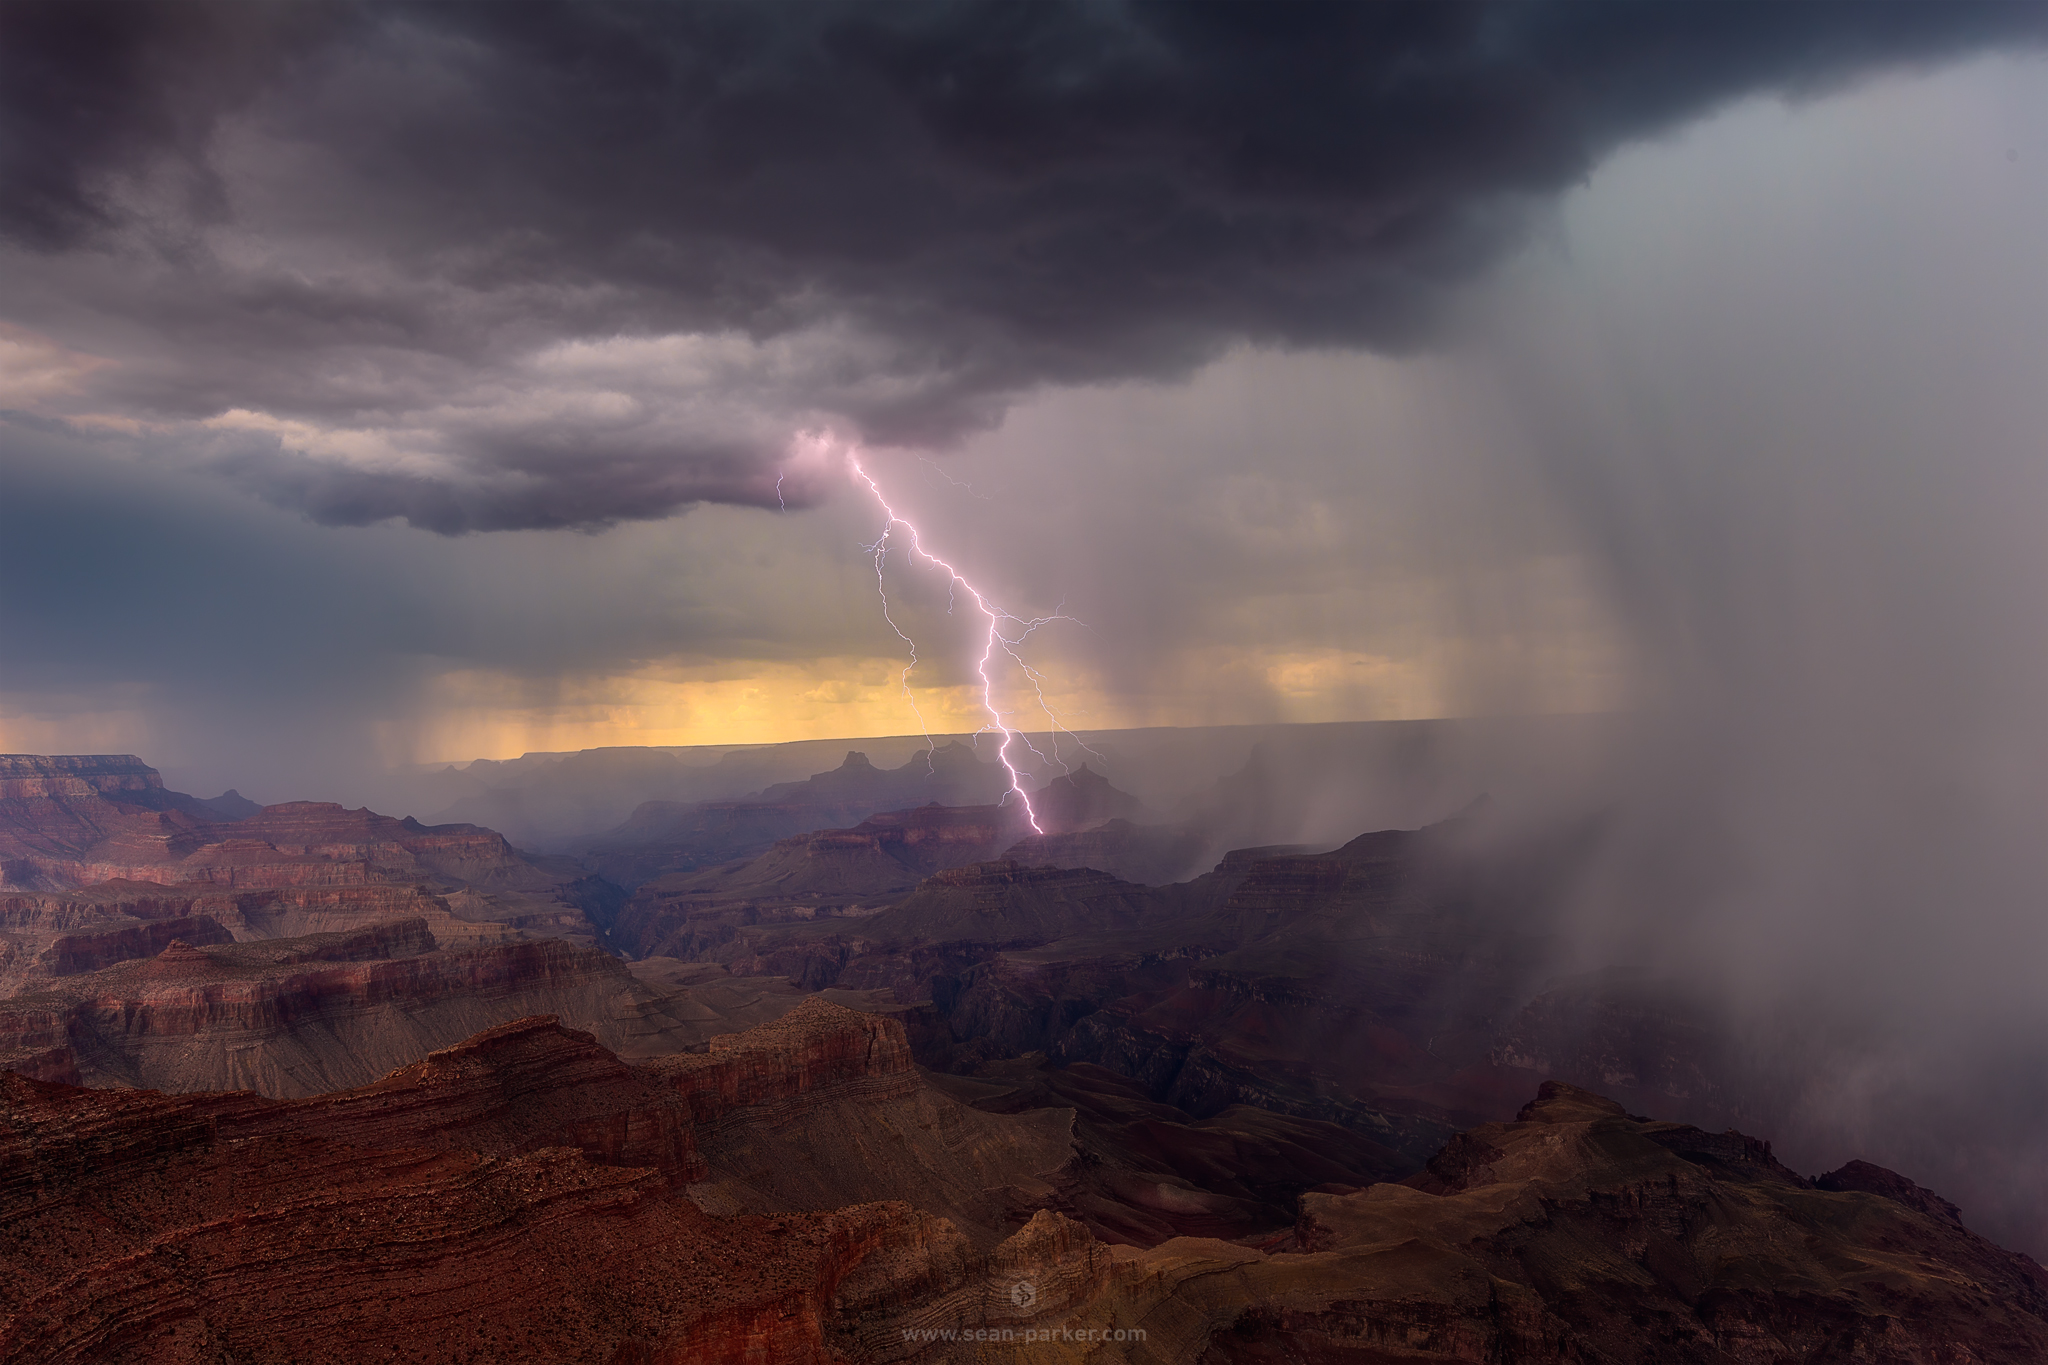 General 2048x1365 nature photography long exposure lightning Sean Parker landscape rain clouds USA Grand Canyon Arizona thunder storm